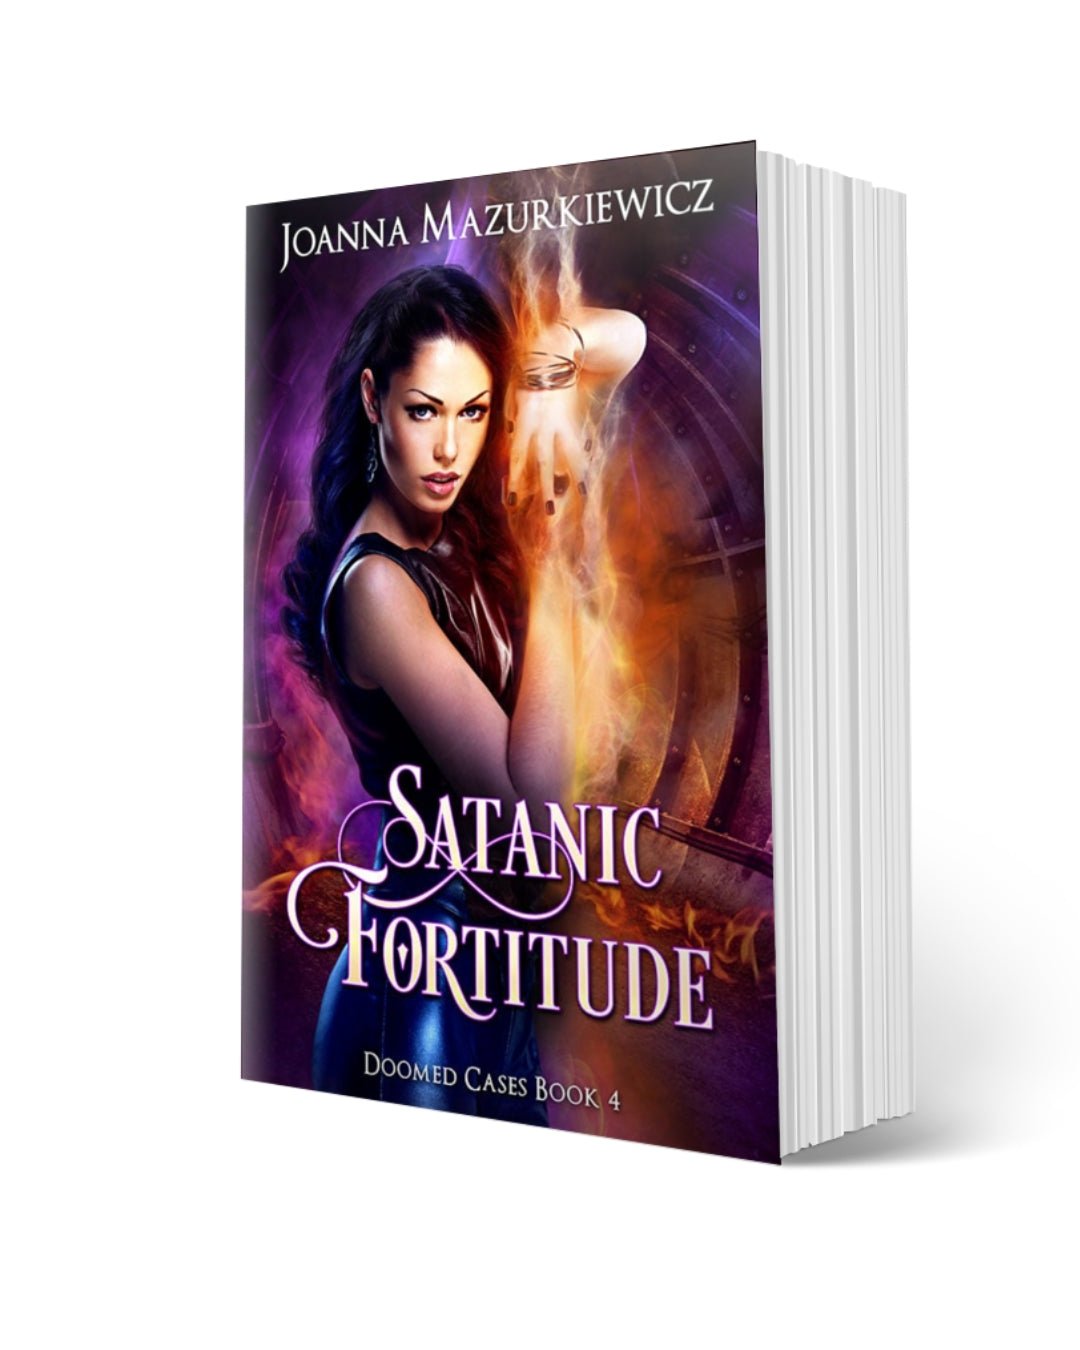 Paperback Copy of Satanic Fortitude (Doomed Cases Series Book 4) - JMazurkiewiczbookstore